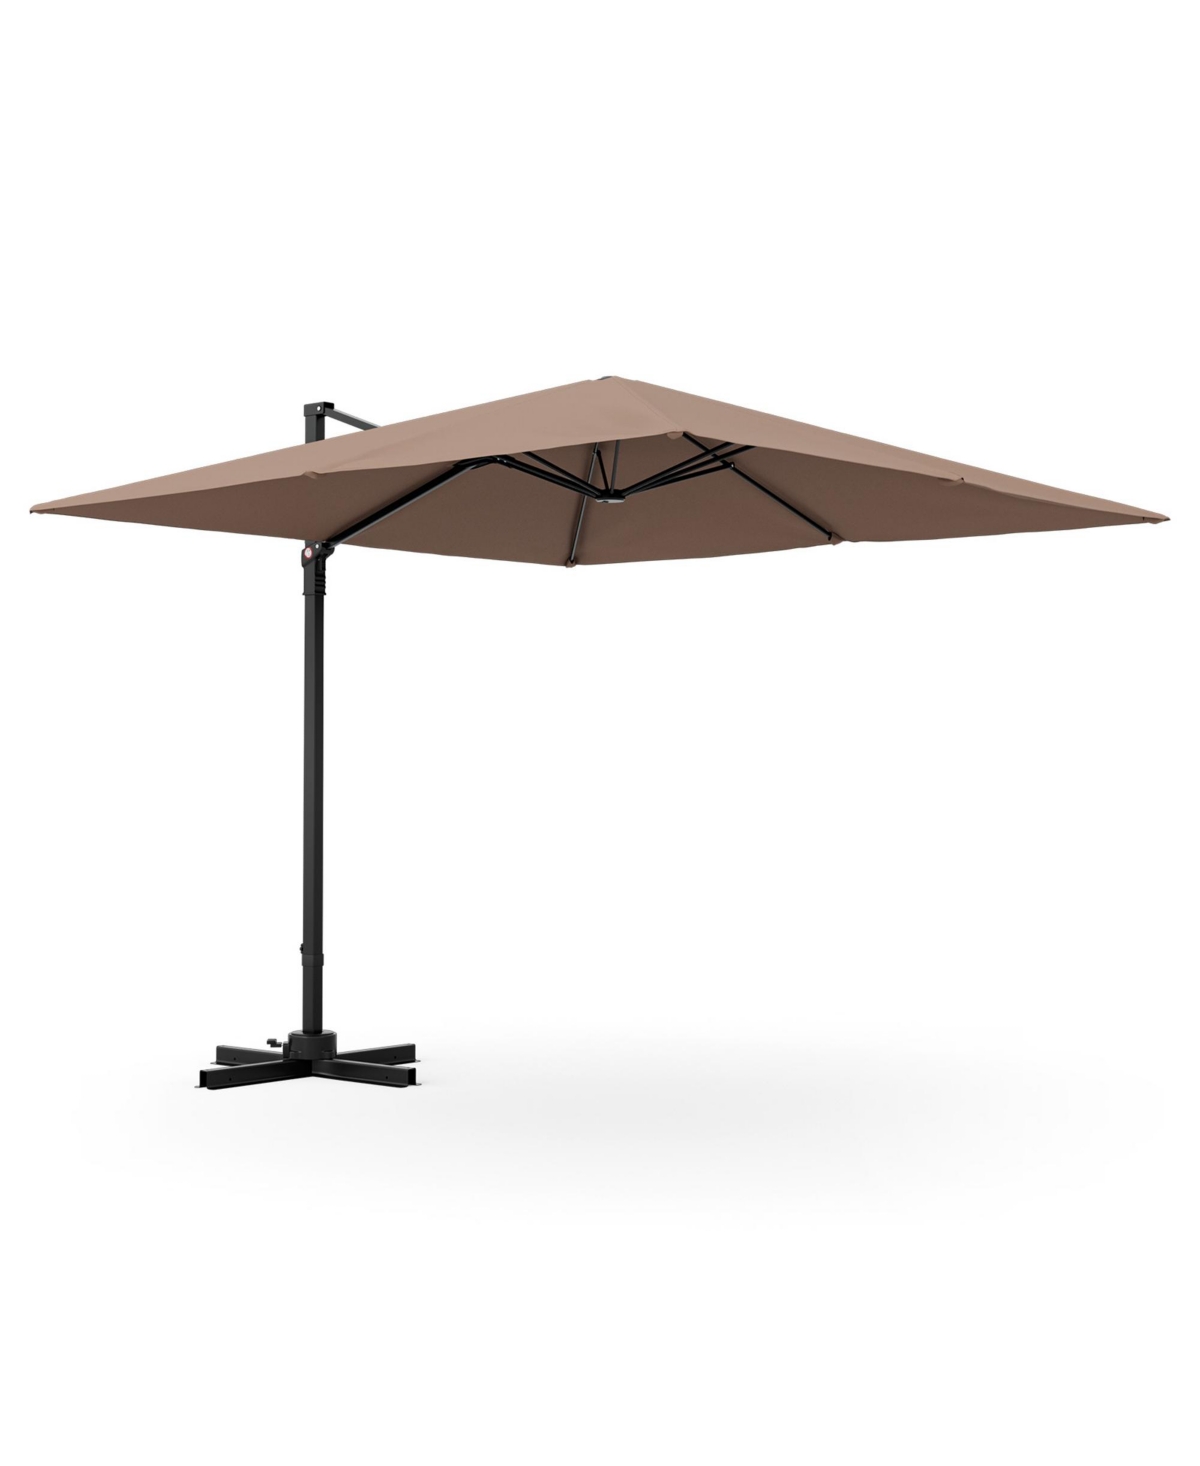 Patio 9.5FT Square Cantilever Offset Hanging Umbrella 2-Tier 360° Outdoor - Beige